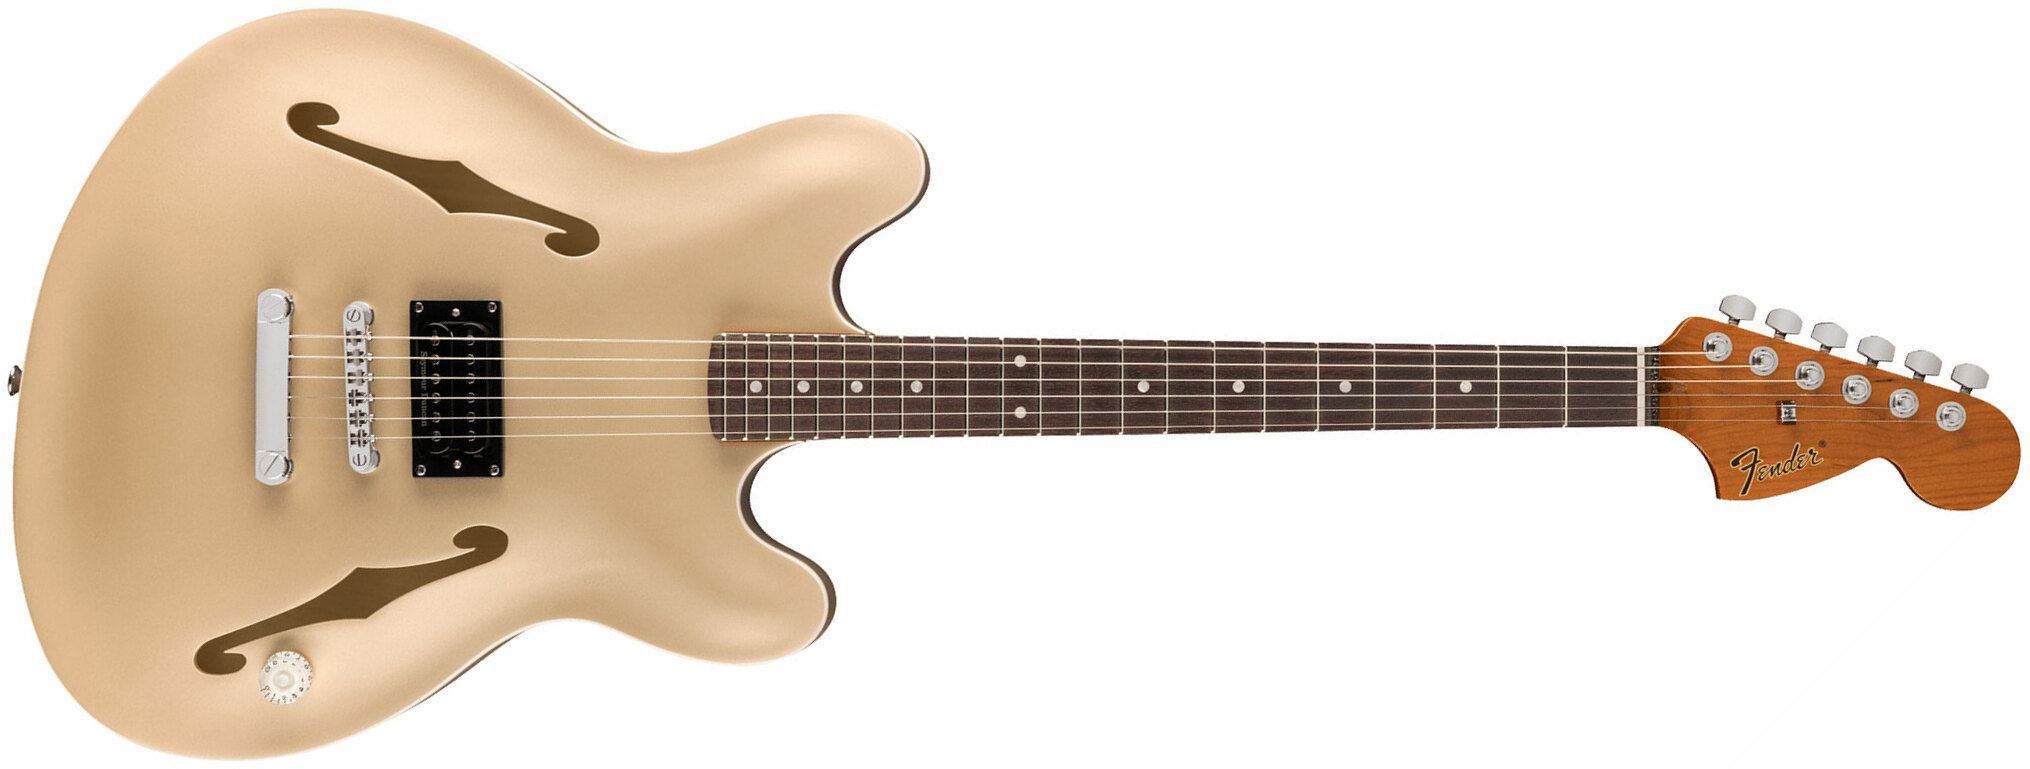 Fender Tom Delonge Starcaster 1h Seymour Duncan Ht Rw - Satin Shoreline Gold - Retro-rock elektrische gitaar - Main picture